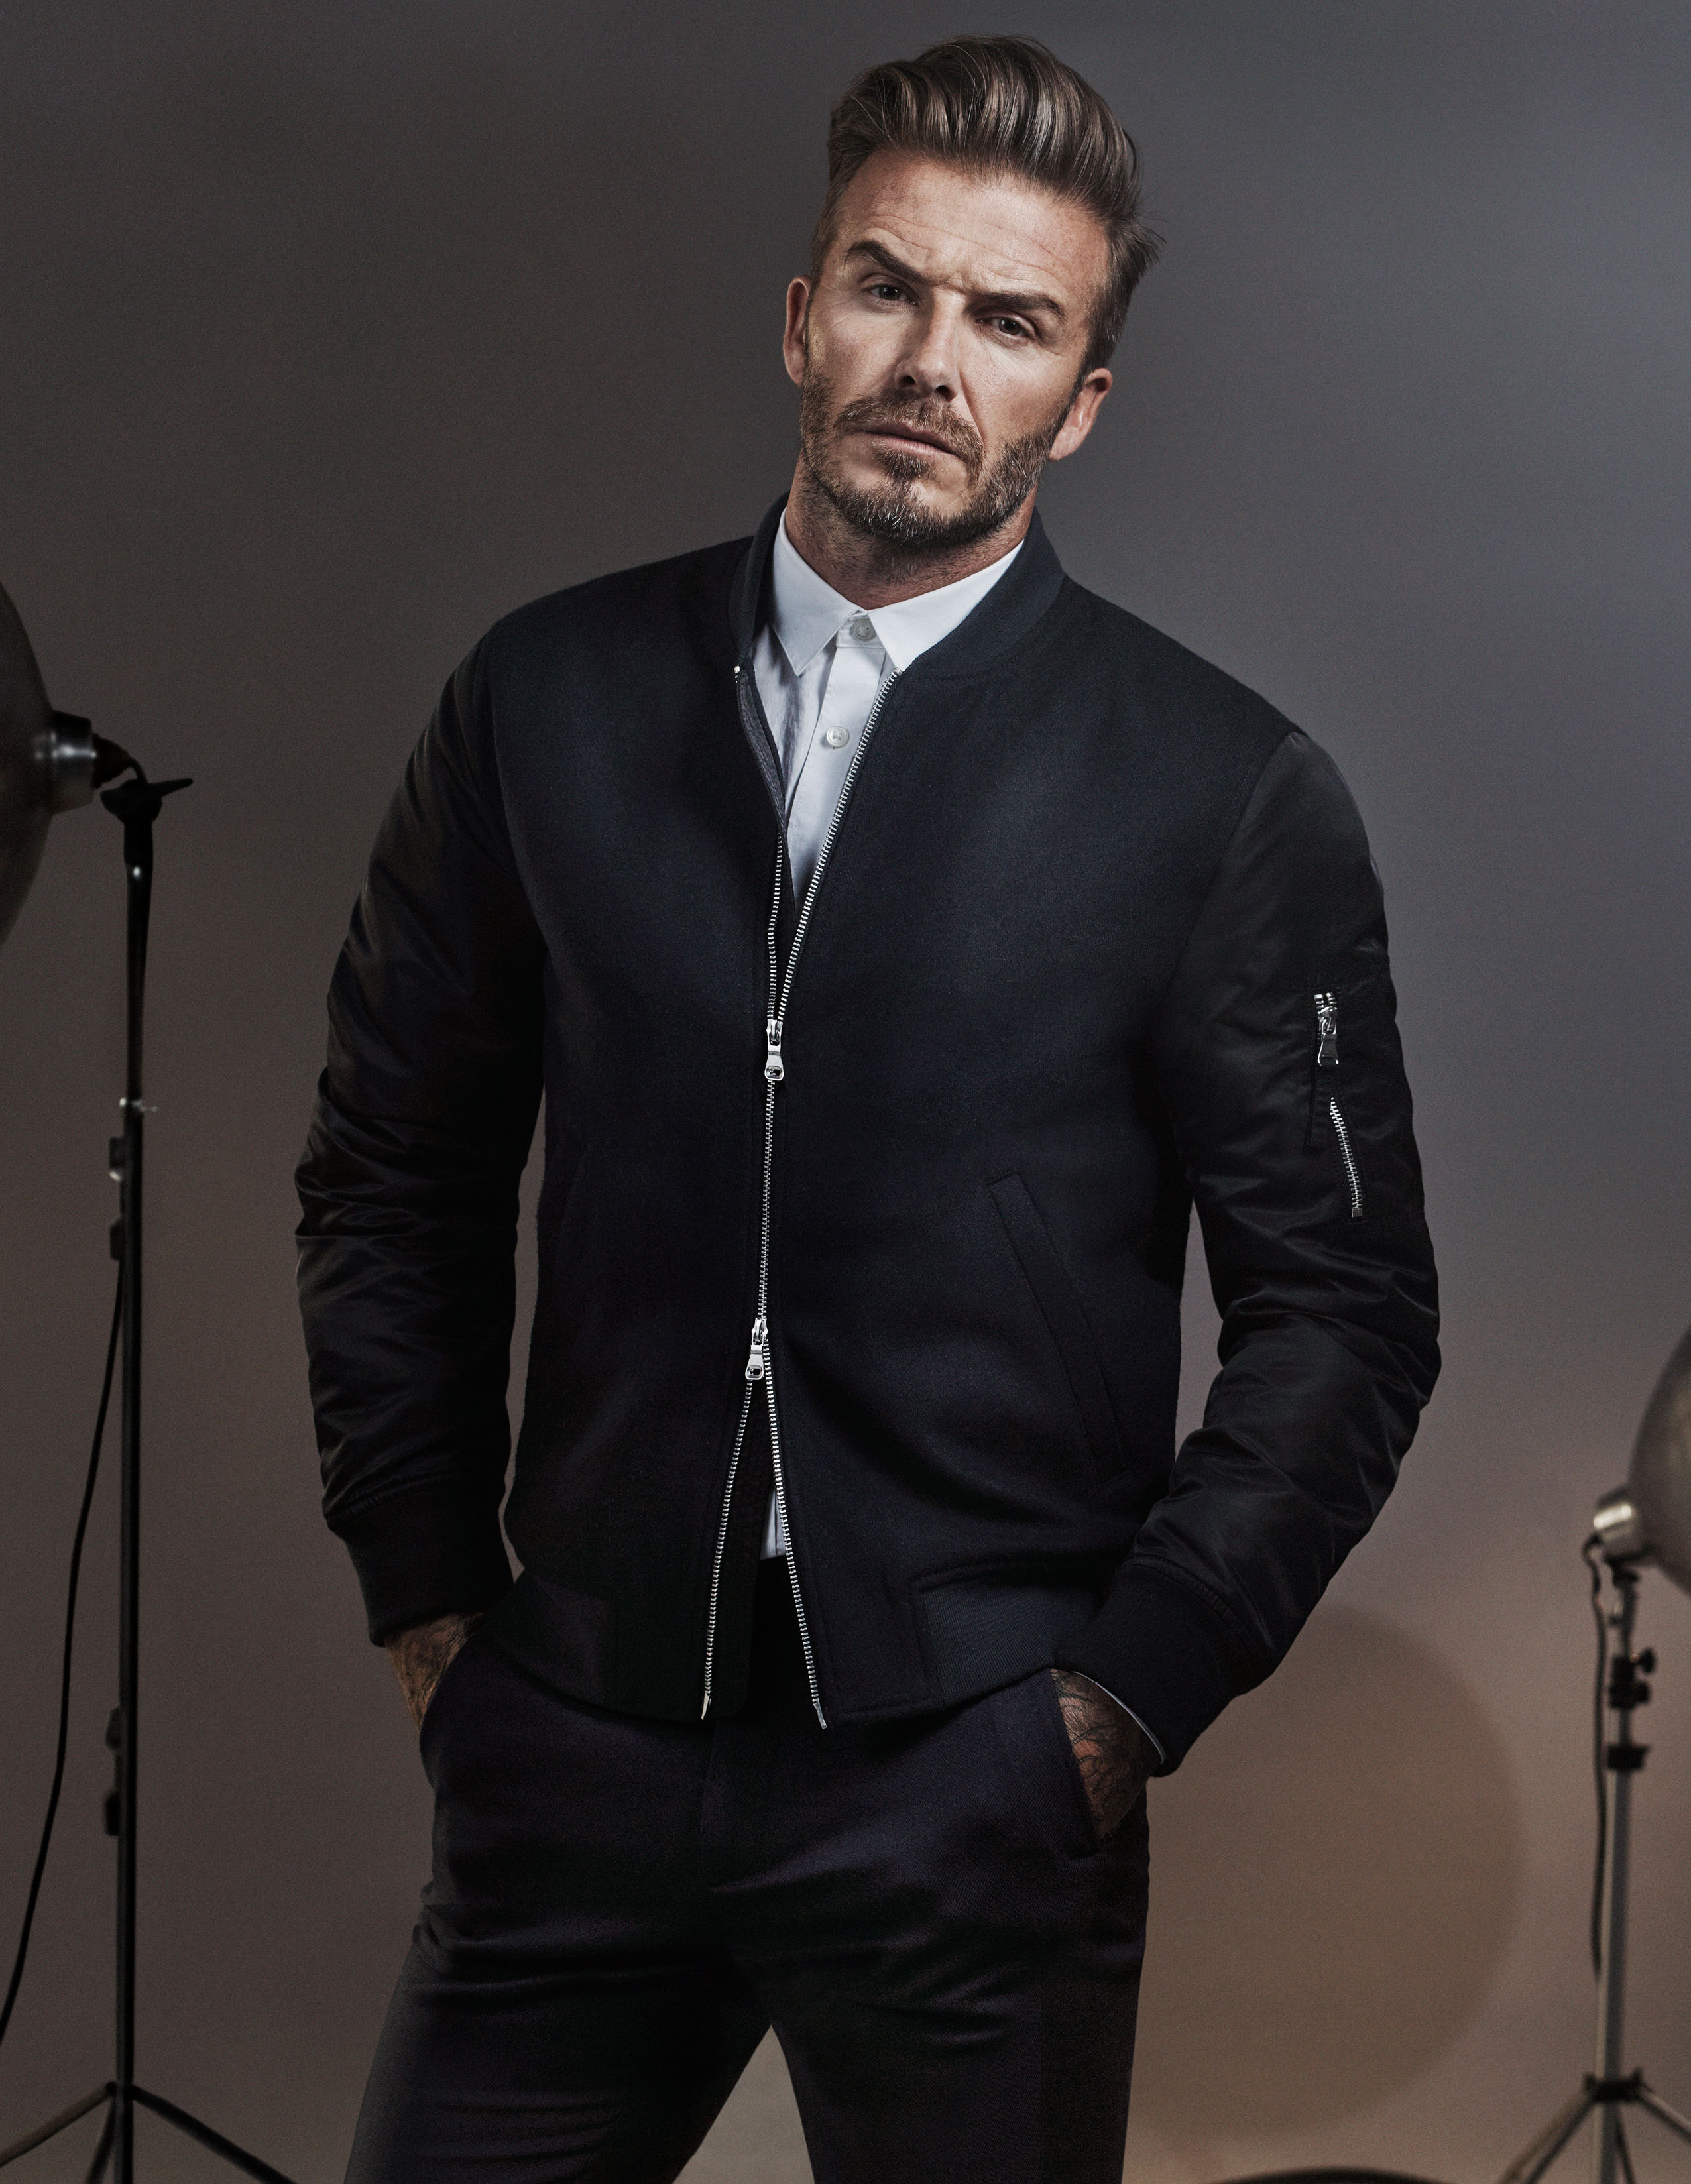 David Beckham photo gallery - high quality pics of David Beckham | ThePlace